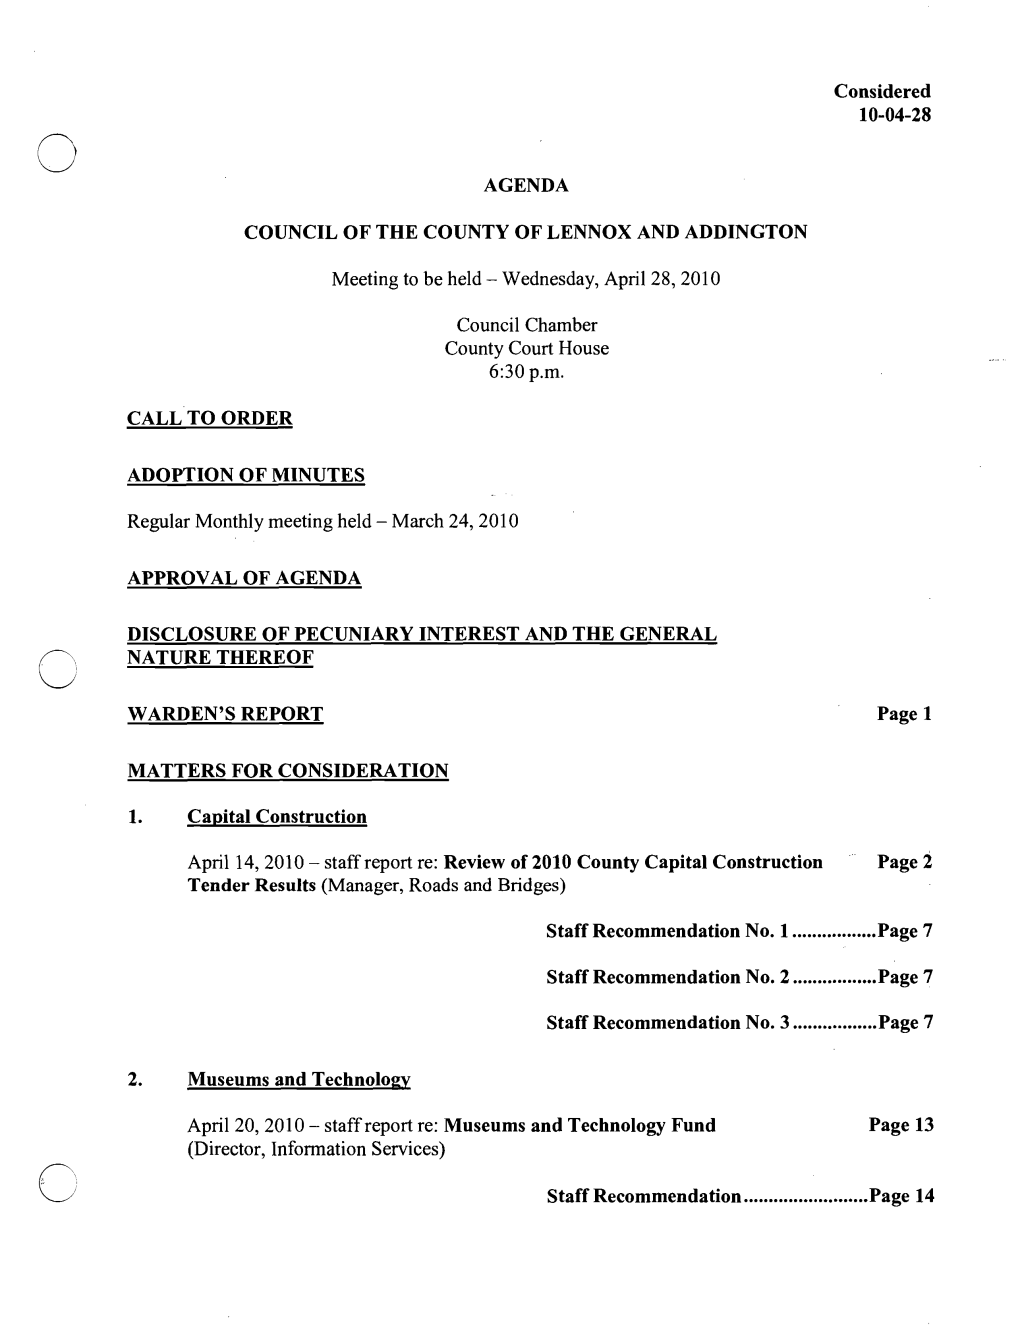 Council Meeting Minutes Agendas – April 28, 2010